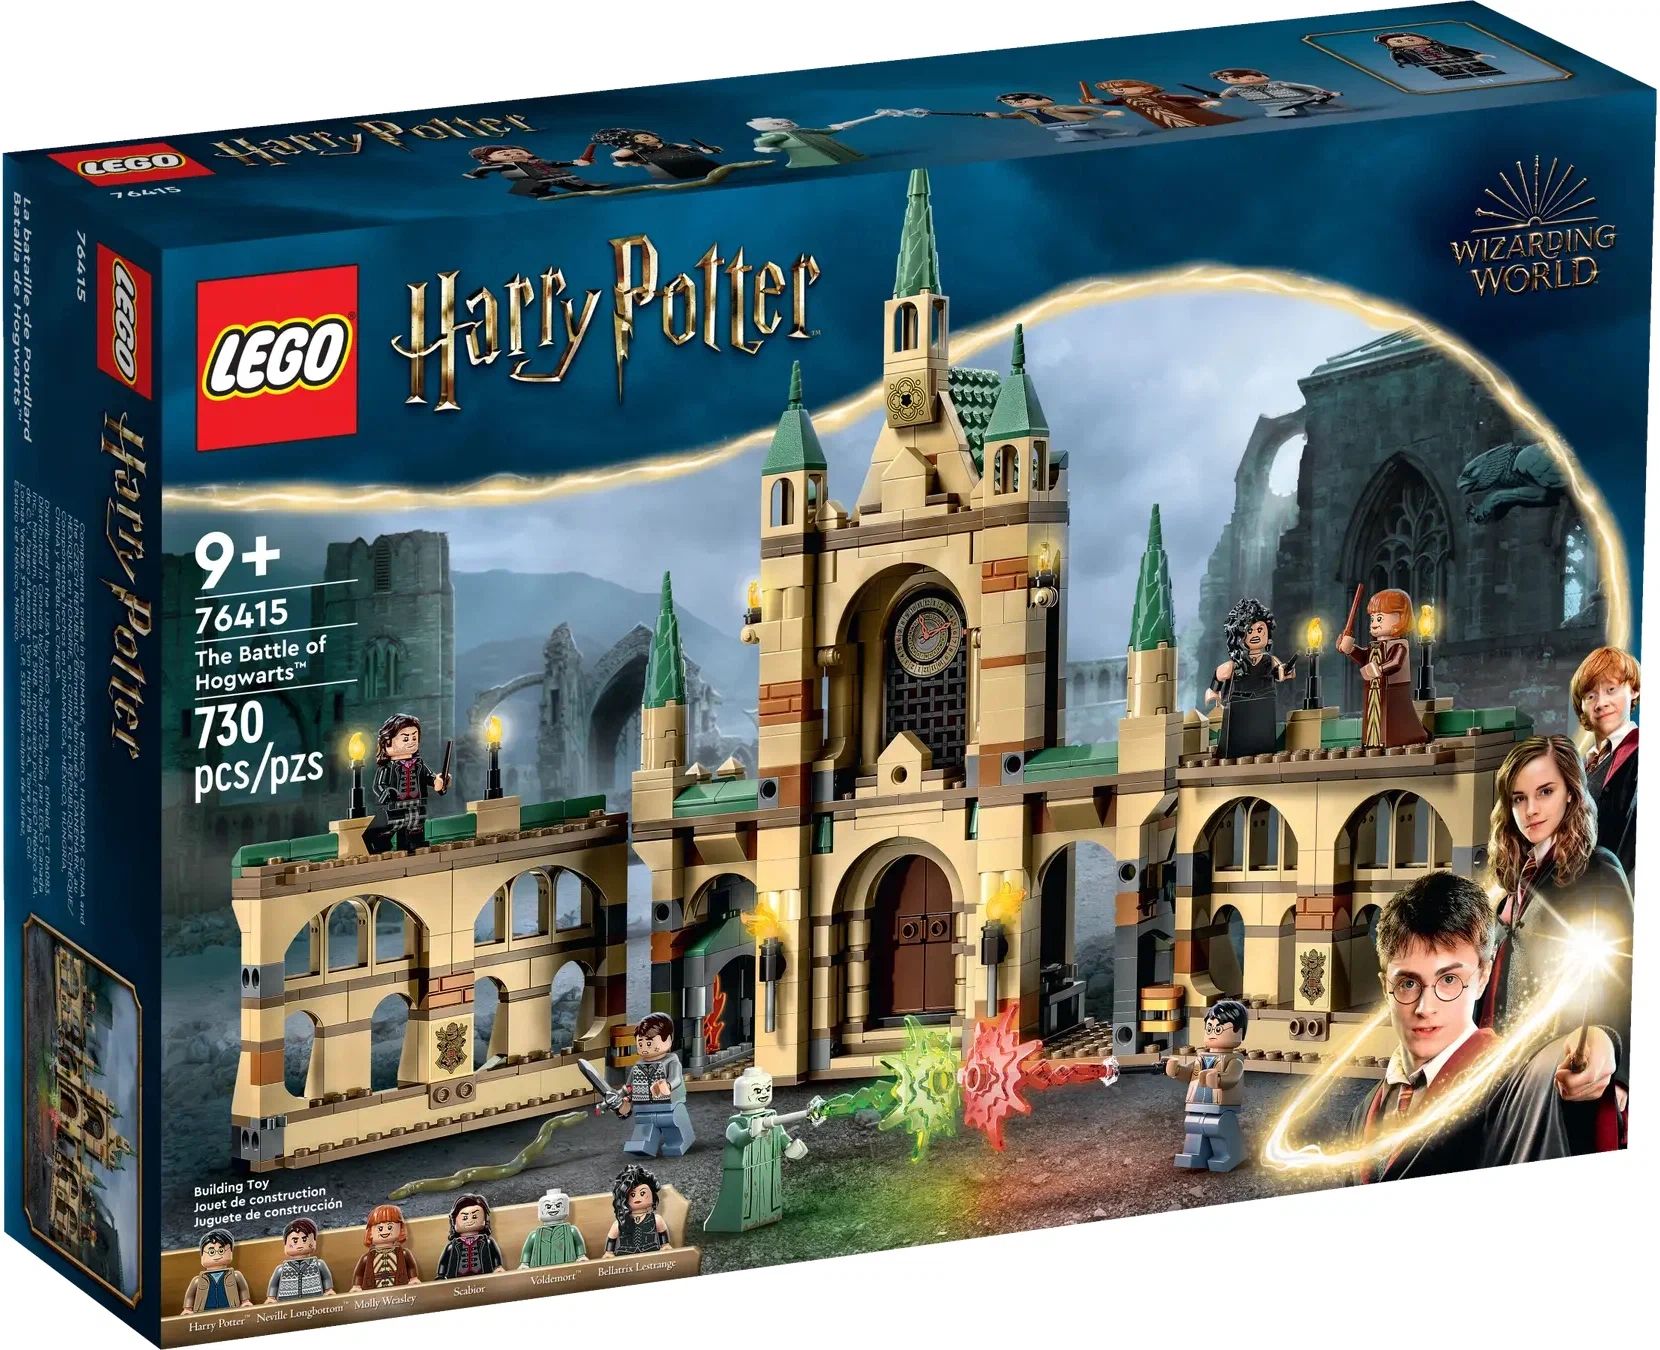 Конструктор LEGO Harry Potter Битва за Хогвартс, 730 деталей, 9+, 76415 конструктор lego 76423 harry potter хогвартс экспресс и станция хогсмид